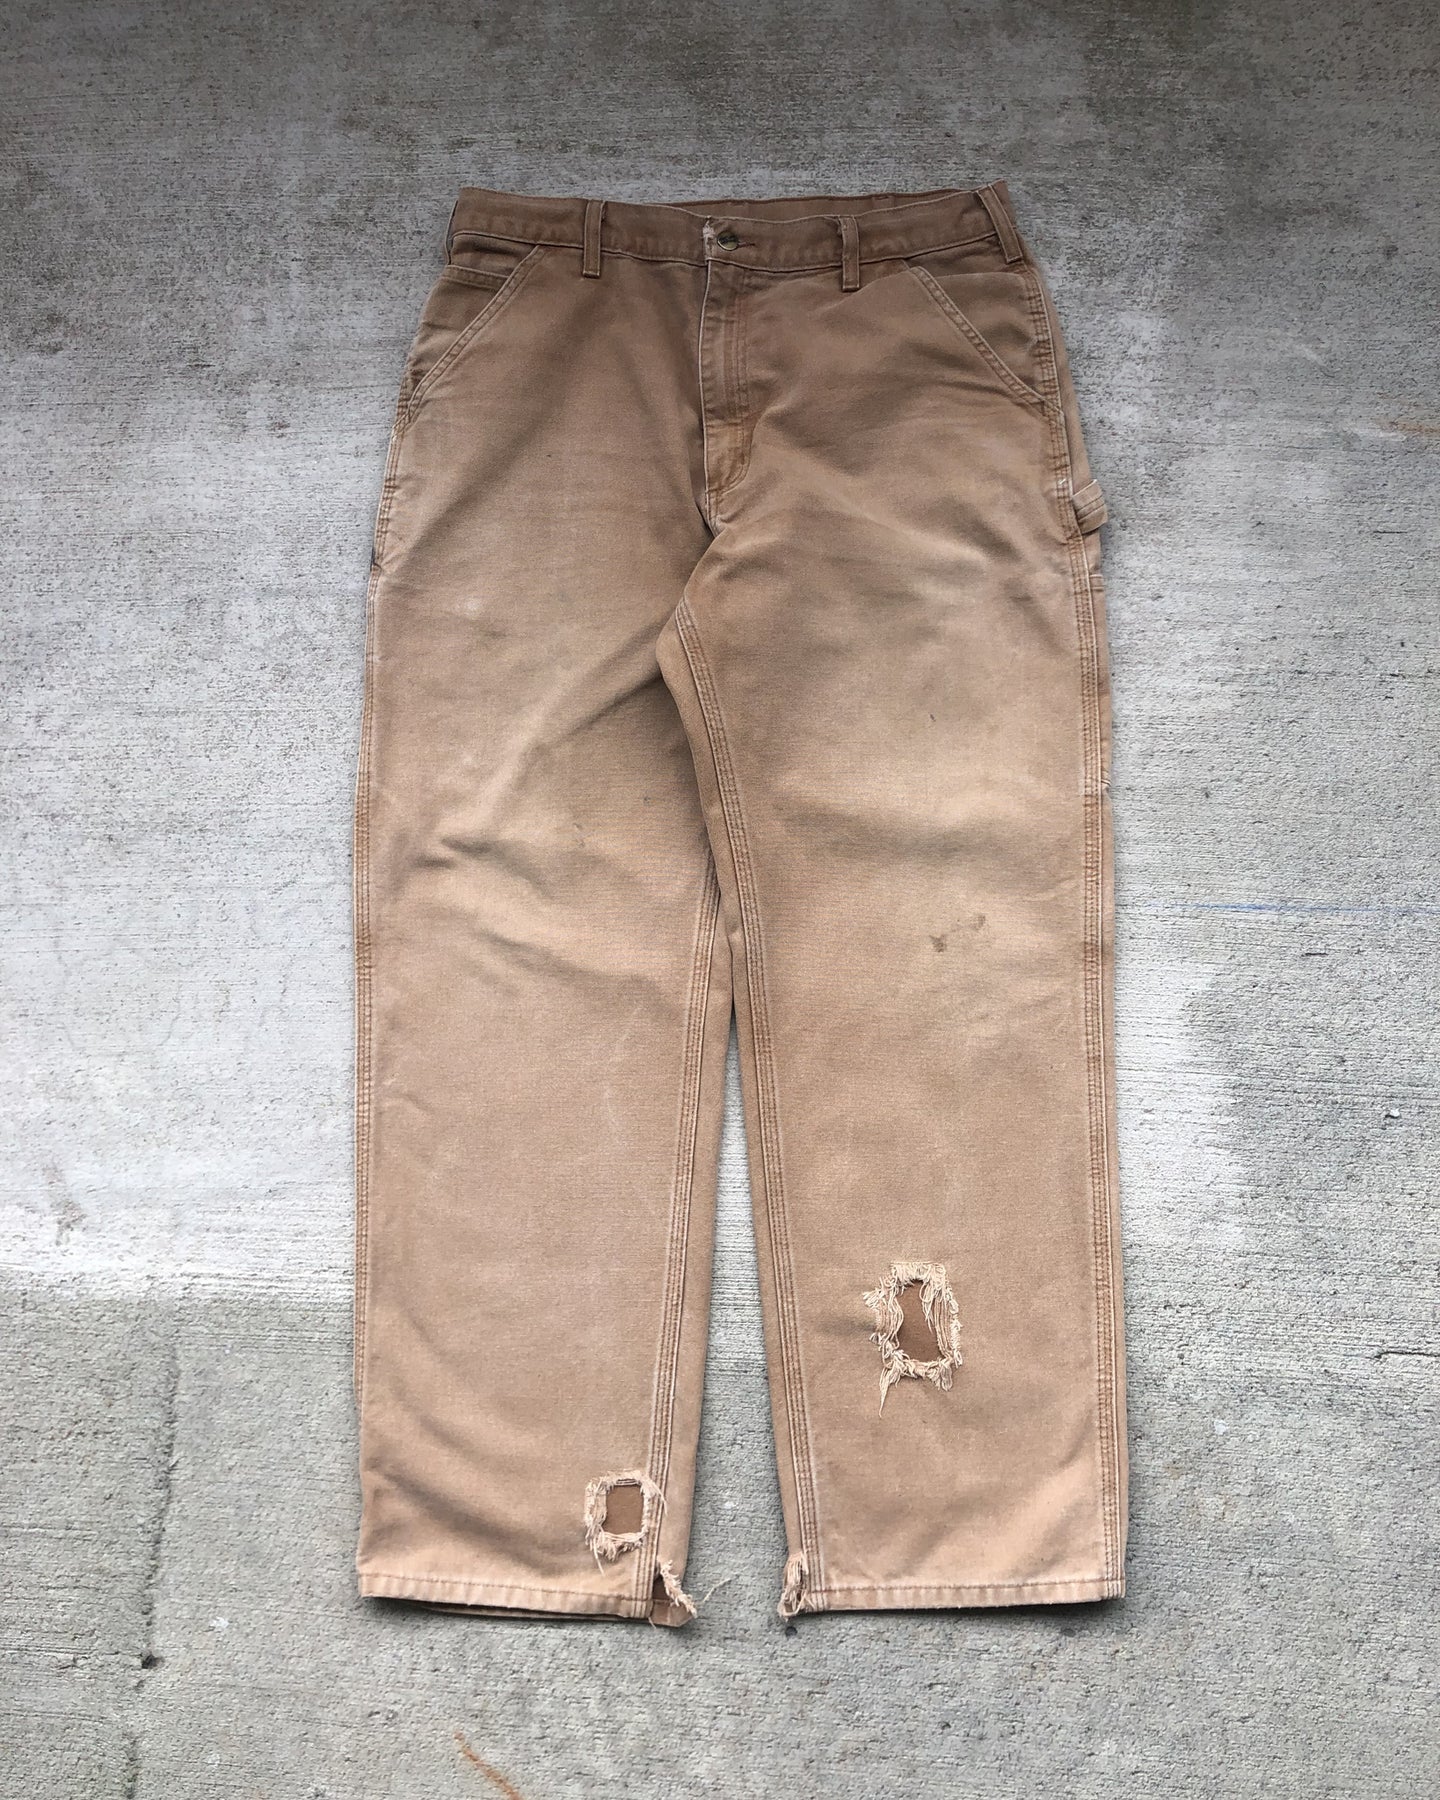 Carhartt Distressed Tan Carpenter Work Pants - 34 x 31